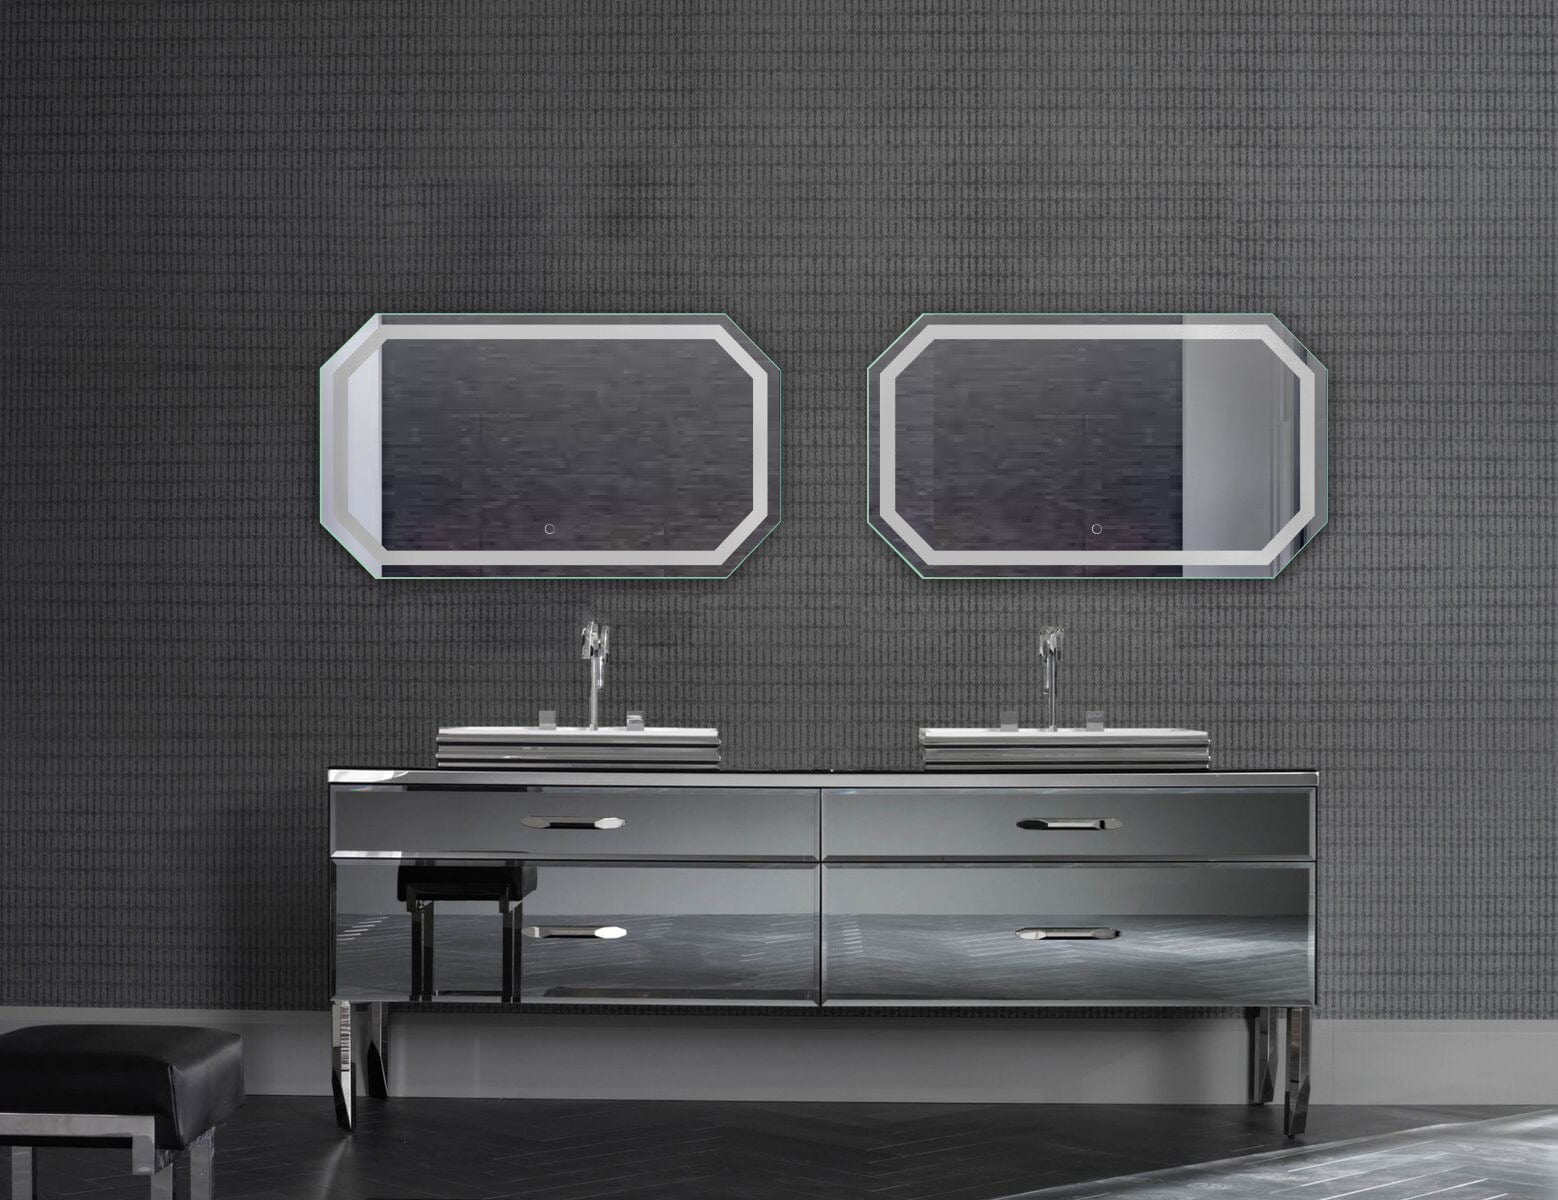 Tudor 60" X 30" LED Bathroom Mirror w/ Dimmer & Defogger | Large Octagon Lighted Vanity Mirror - Molaix - Molaix853962007606Lighted Wall Mirror,OctagonTUDOR6030